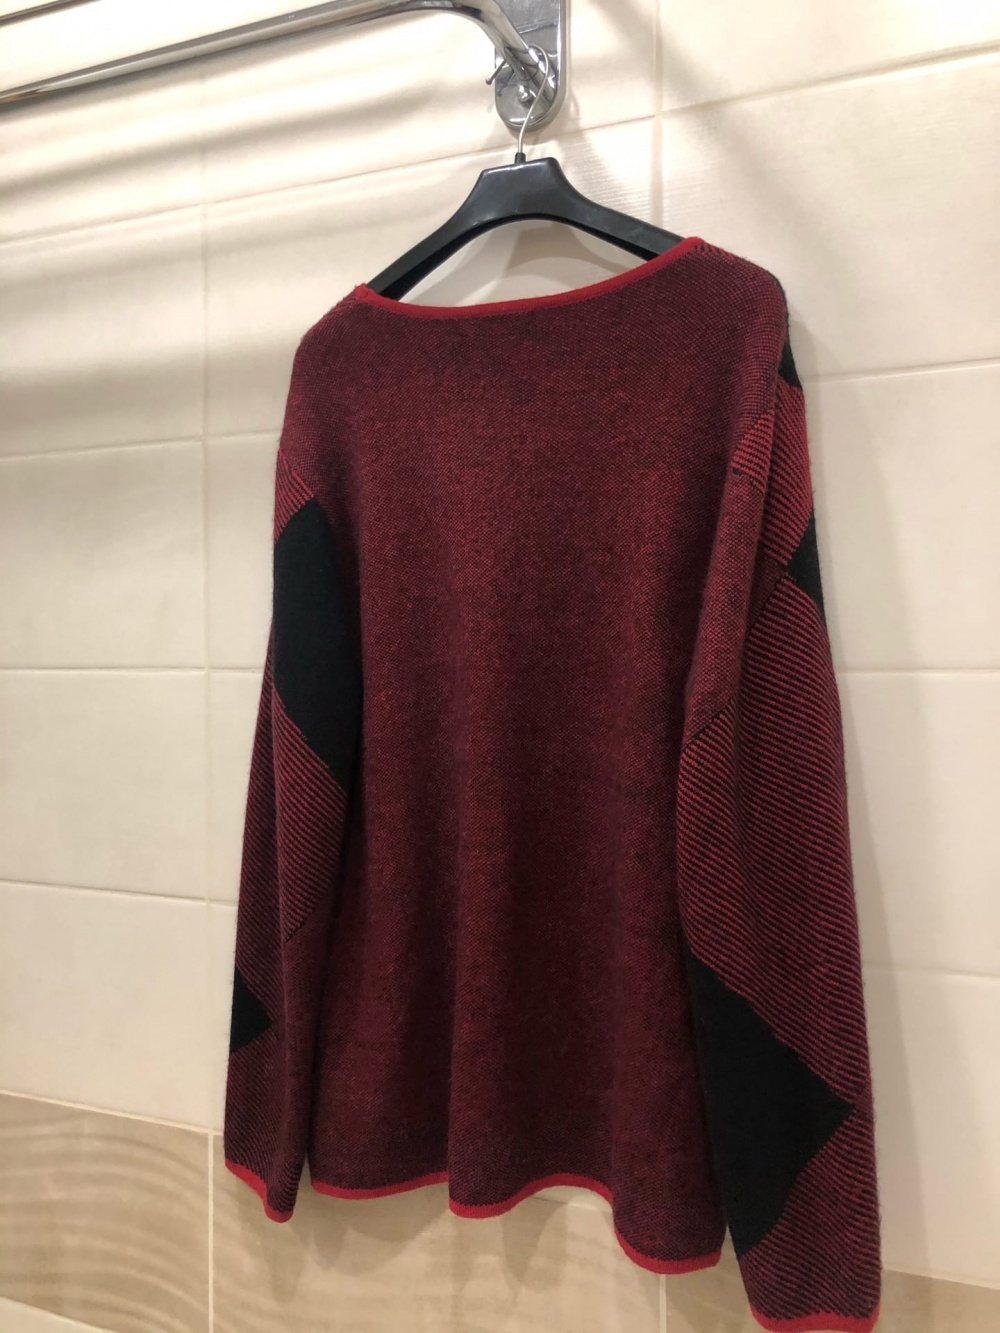 Пуловер HABELLA. Размер 46-48.